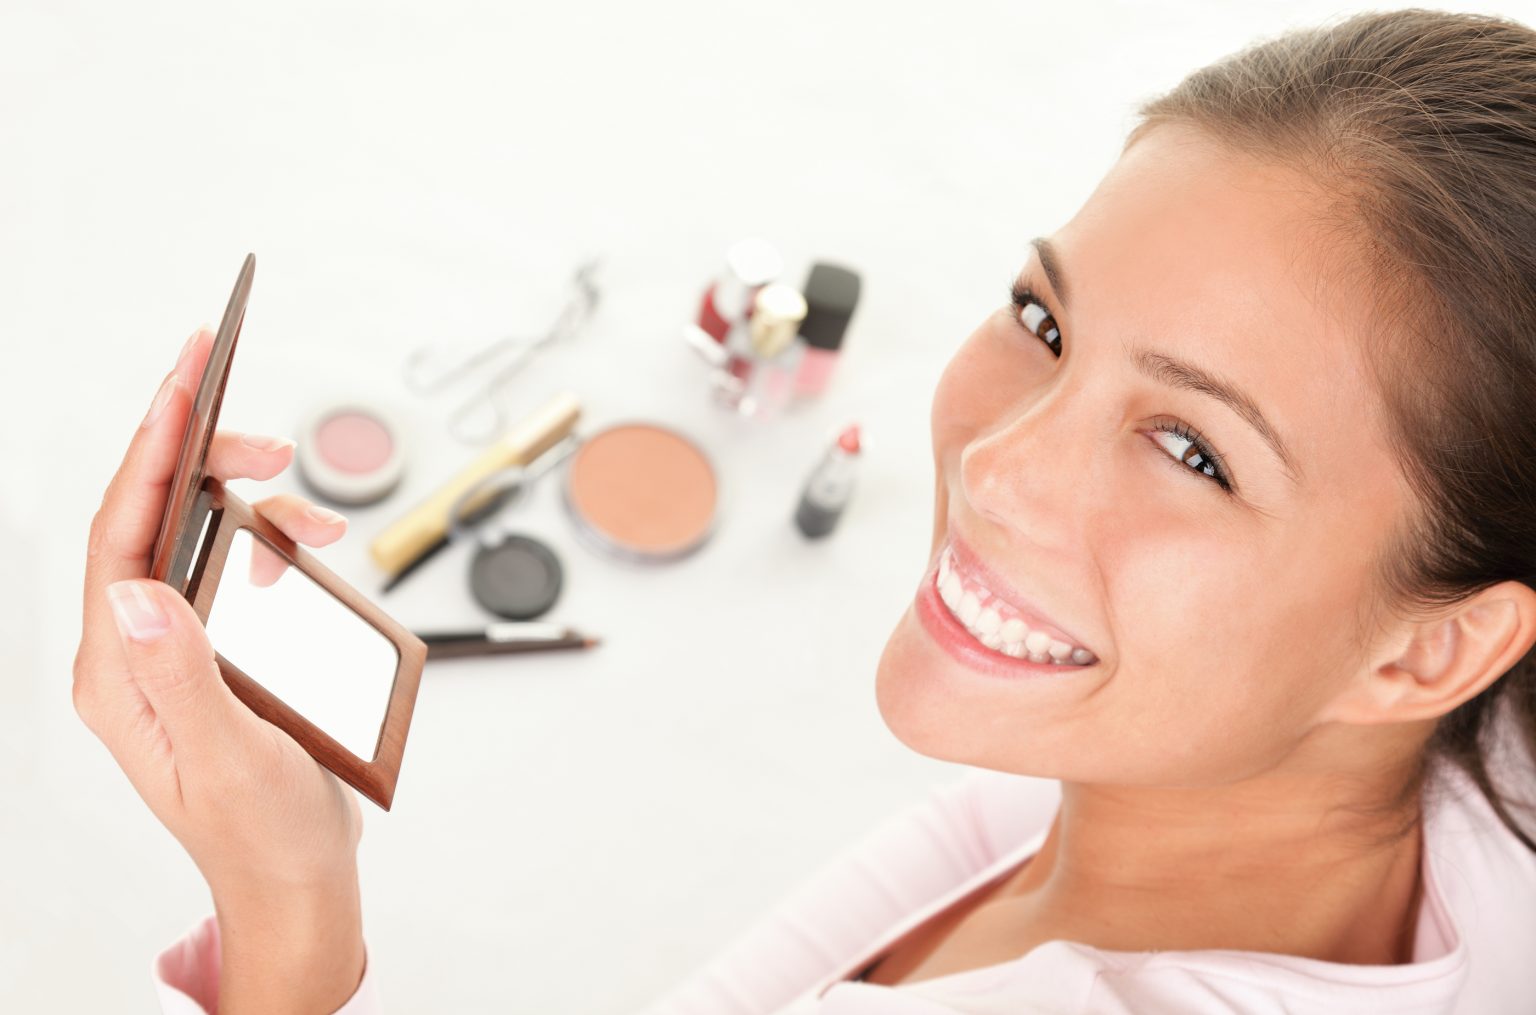 beauty rewards on smartphone apps